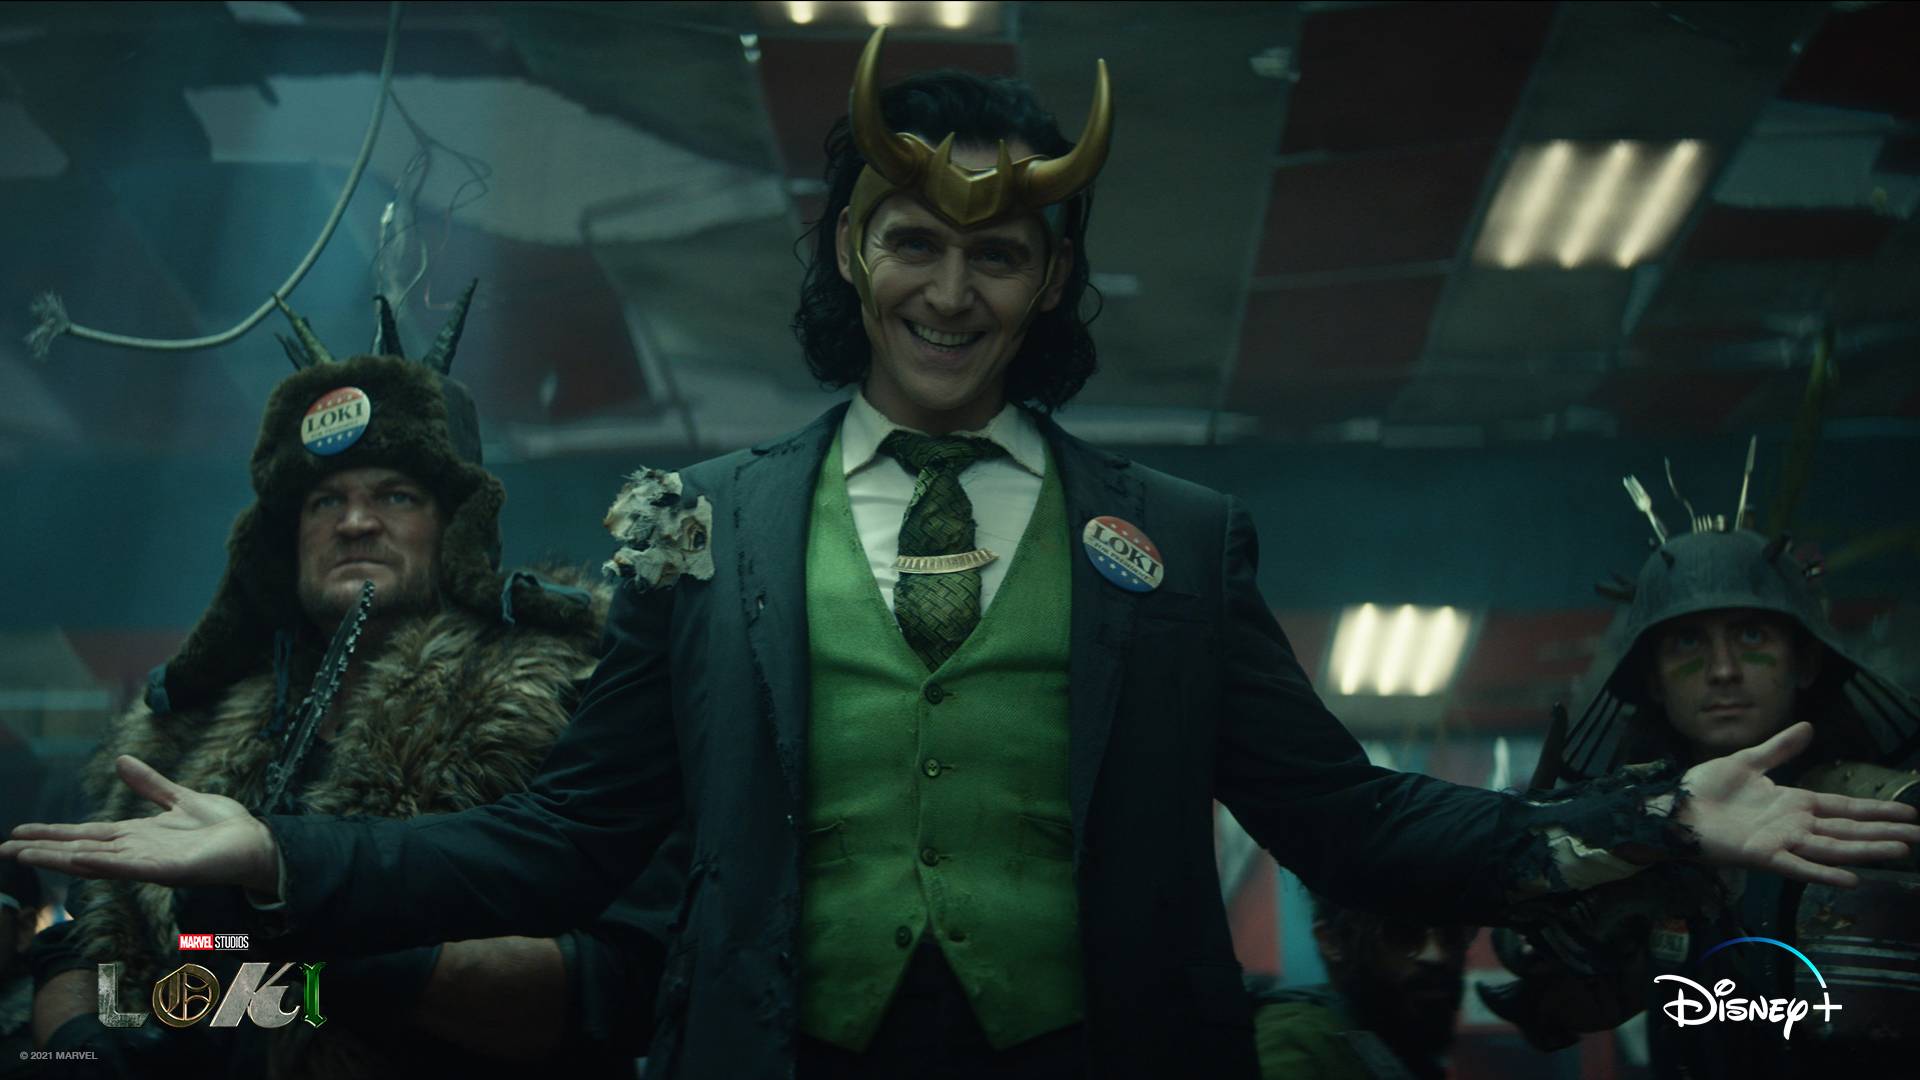 Wonder reveals that ‘Loki’ will originate streaming on Disney+ on June 11th